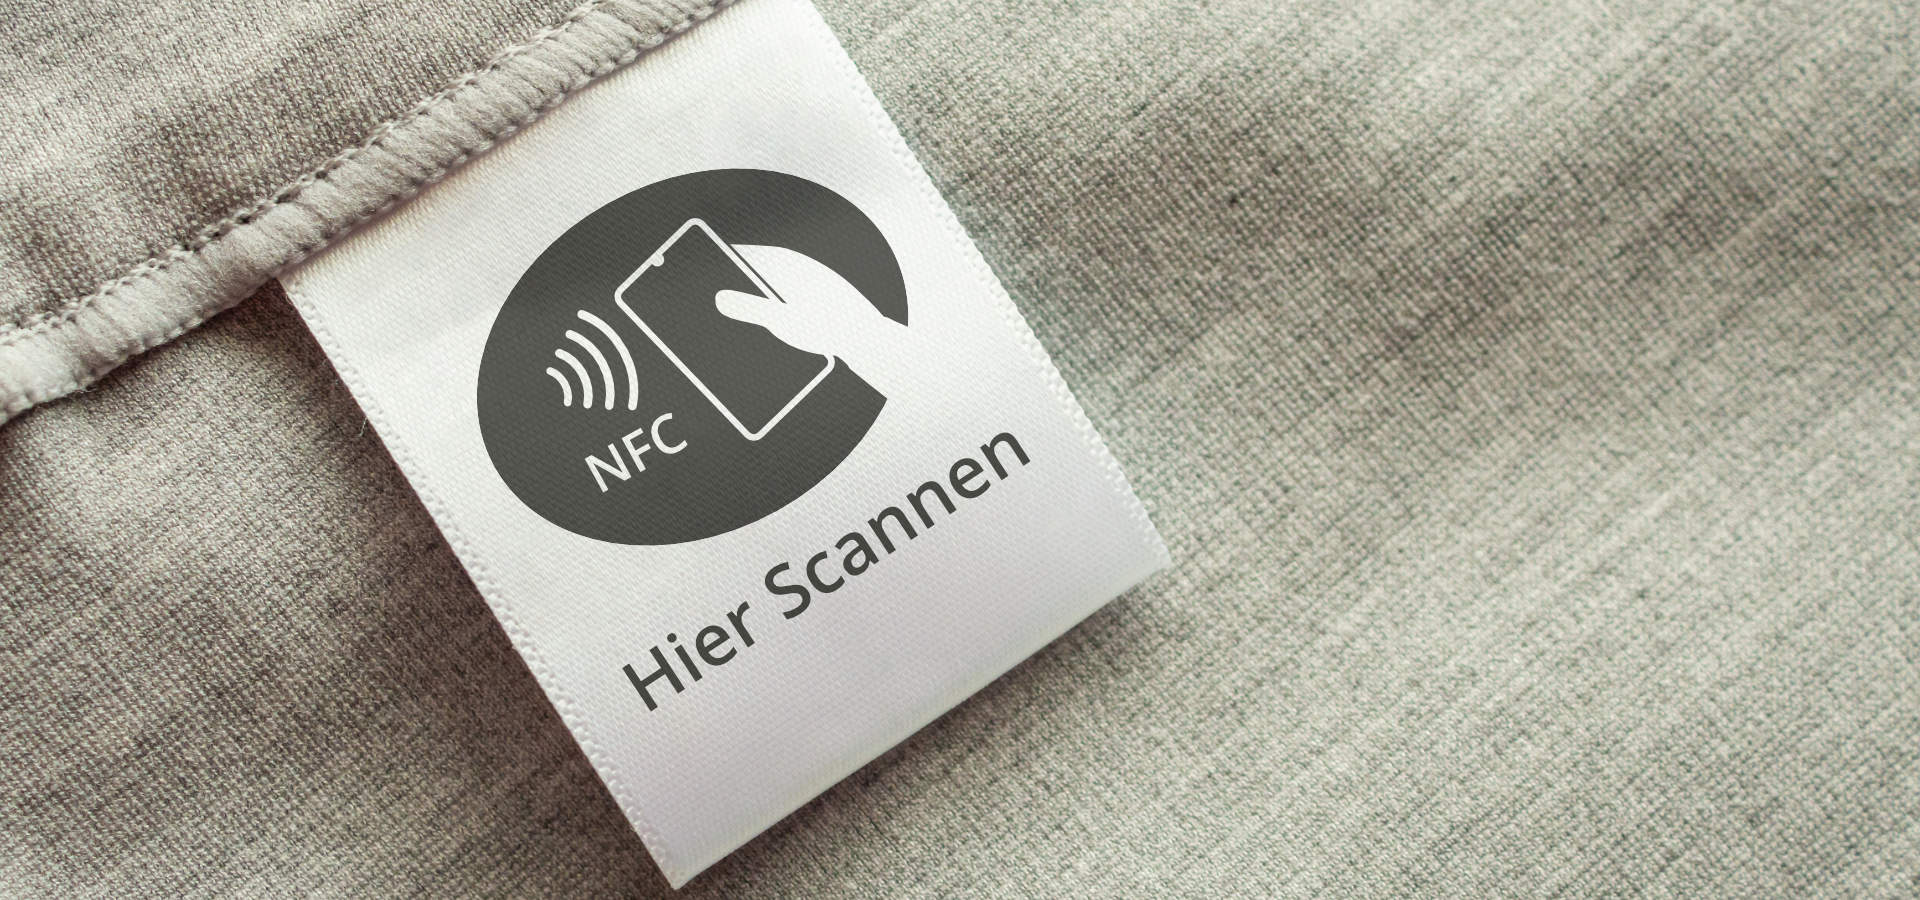 NFC tag on grey garment